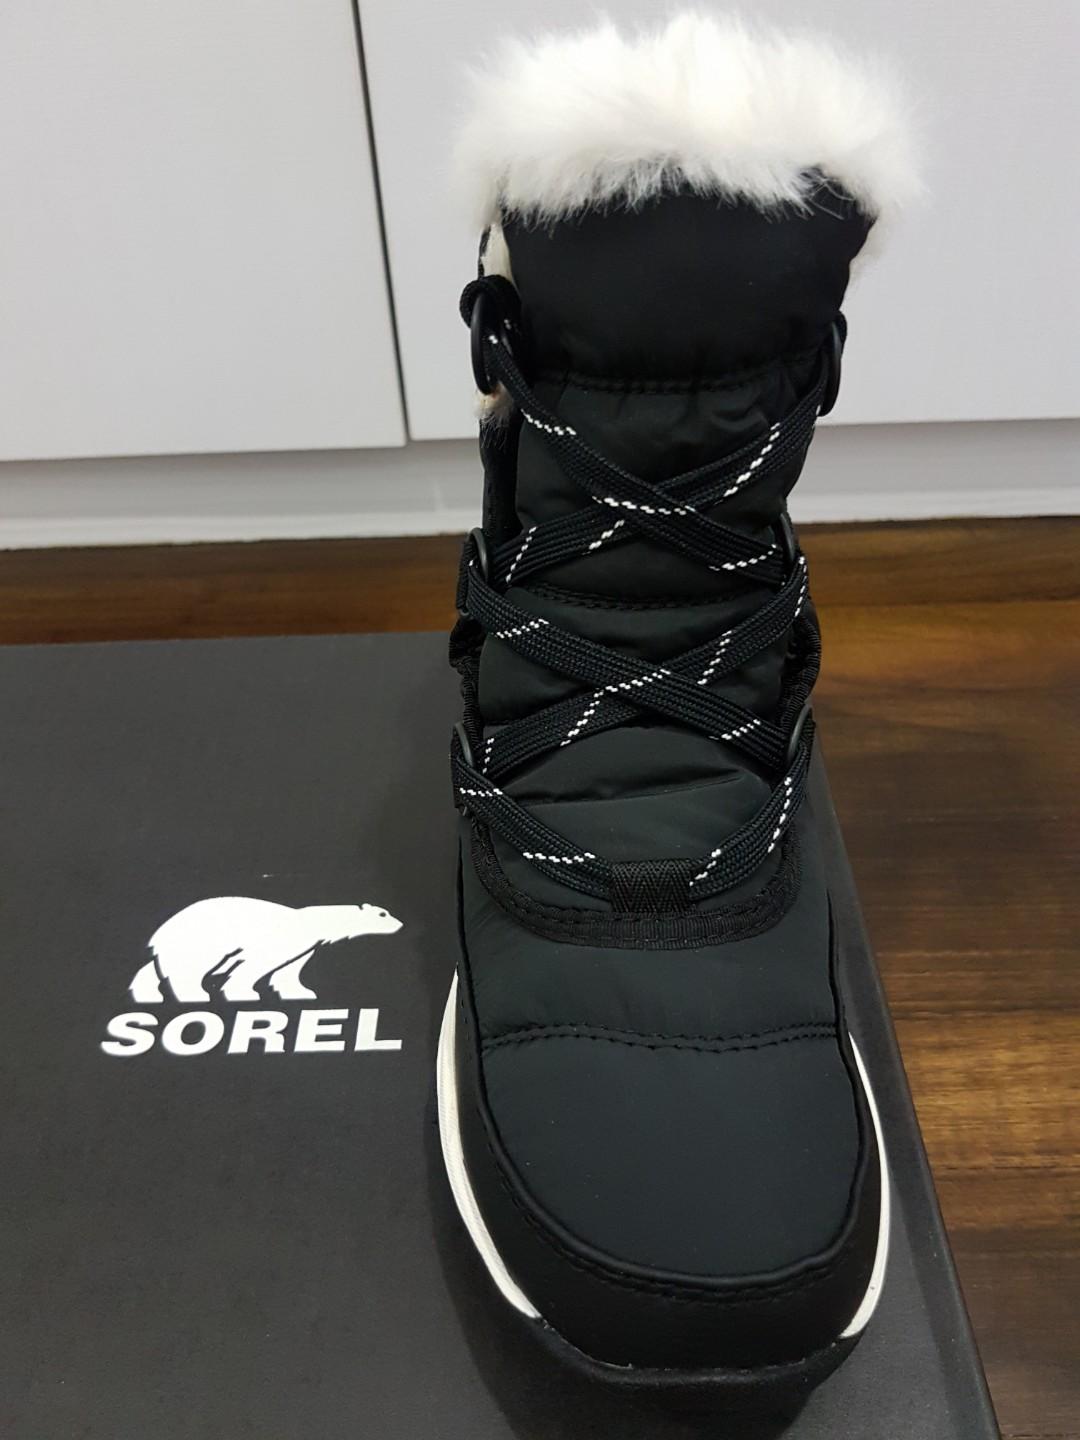 sorel shoe boots